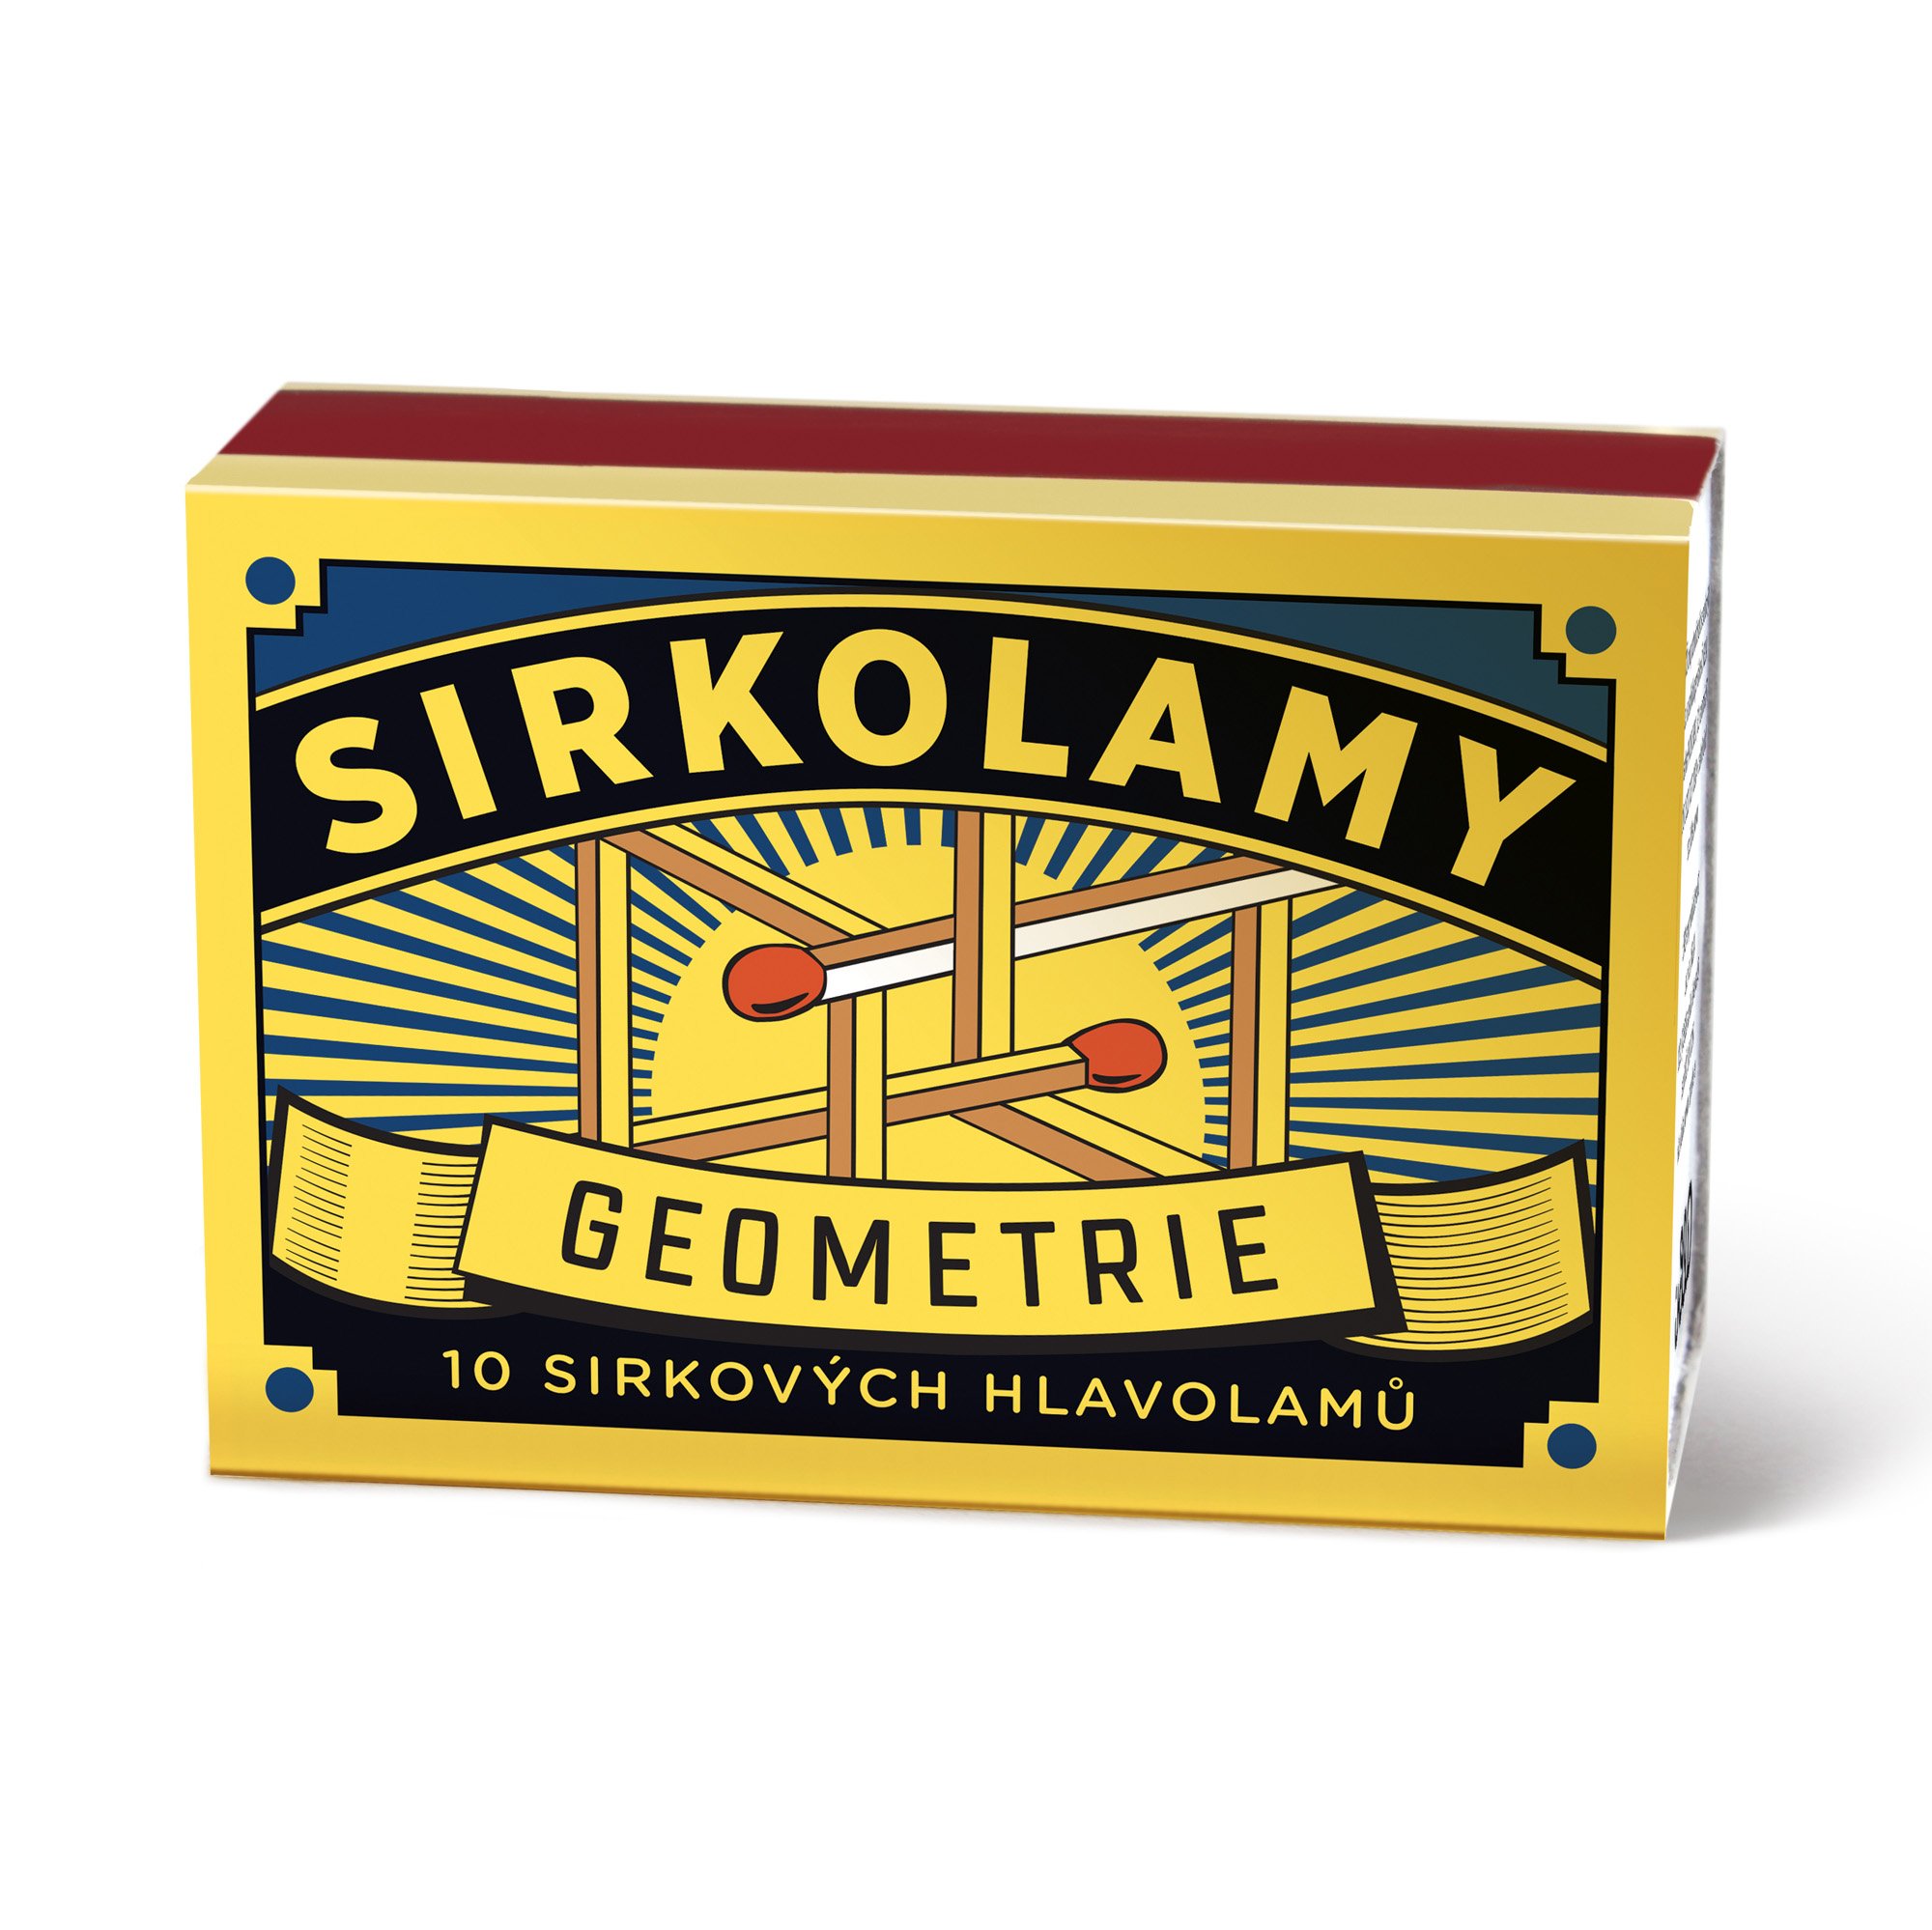 Albi Sirkolamy - Geometrie - Albi